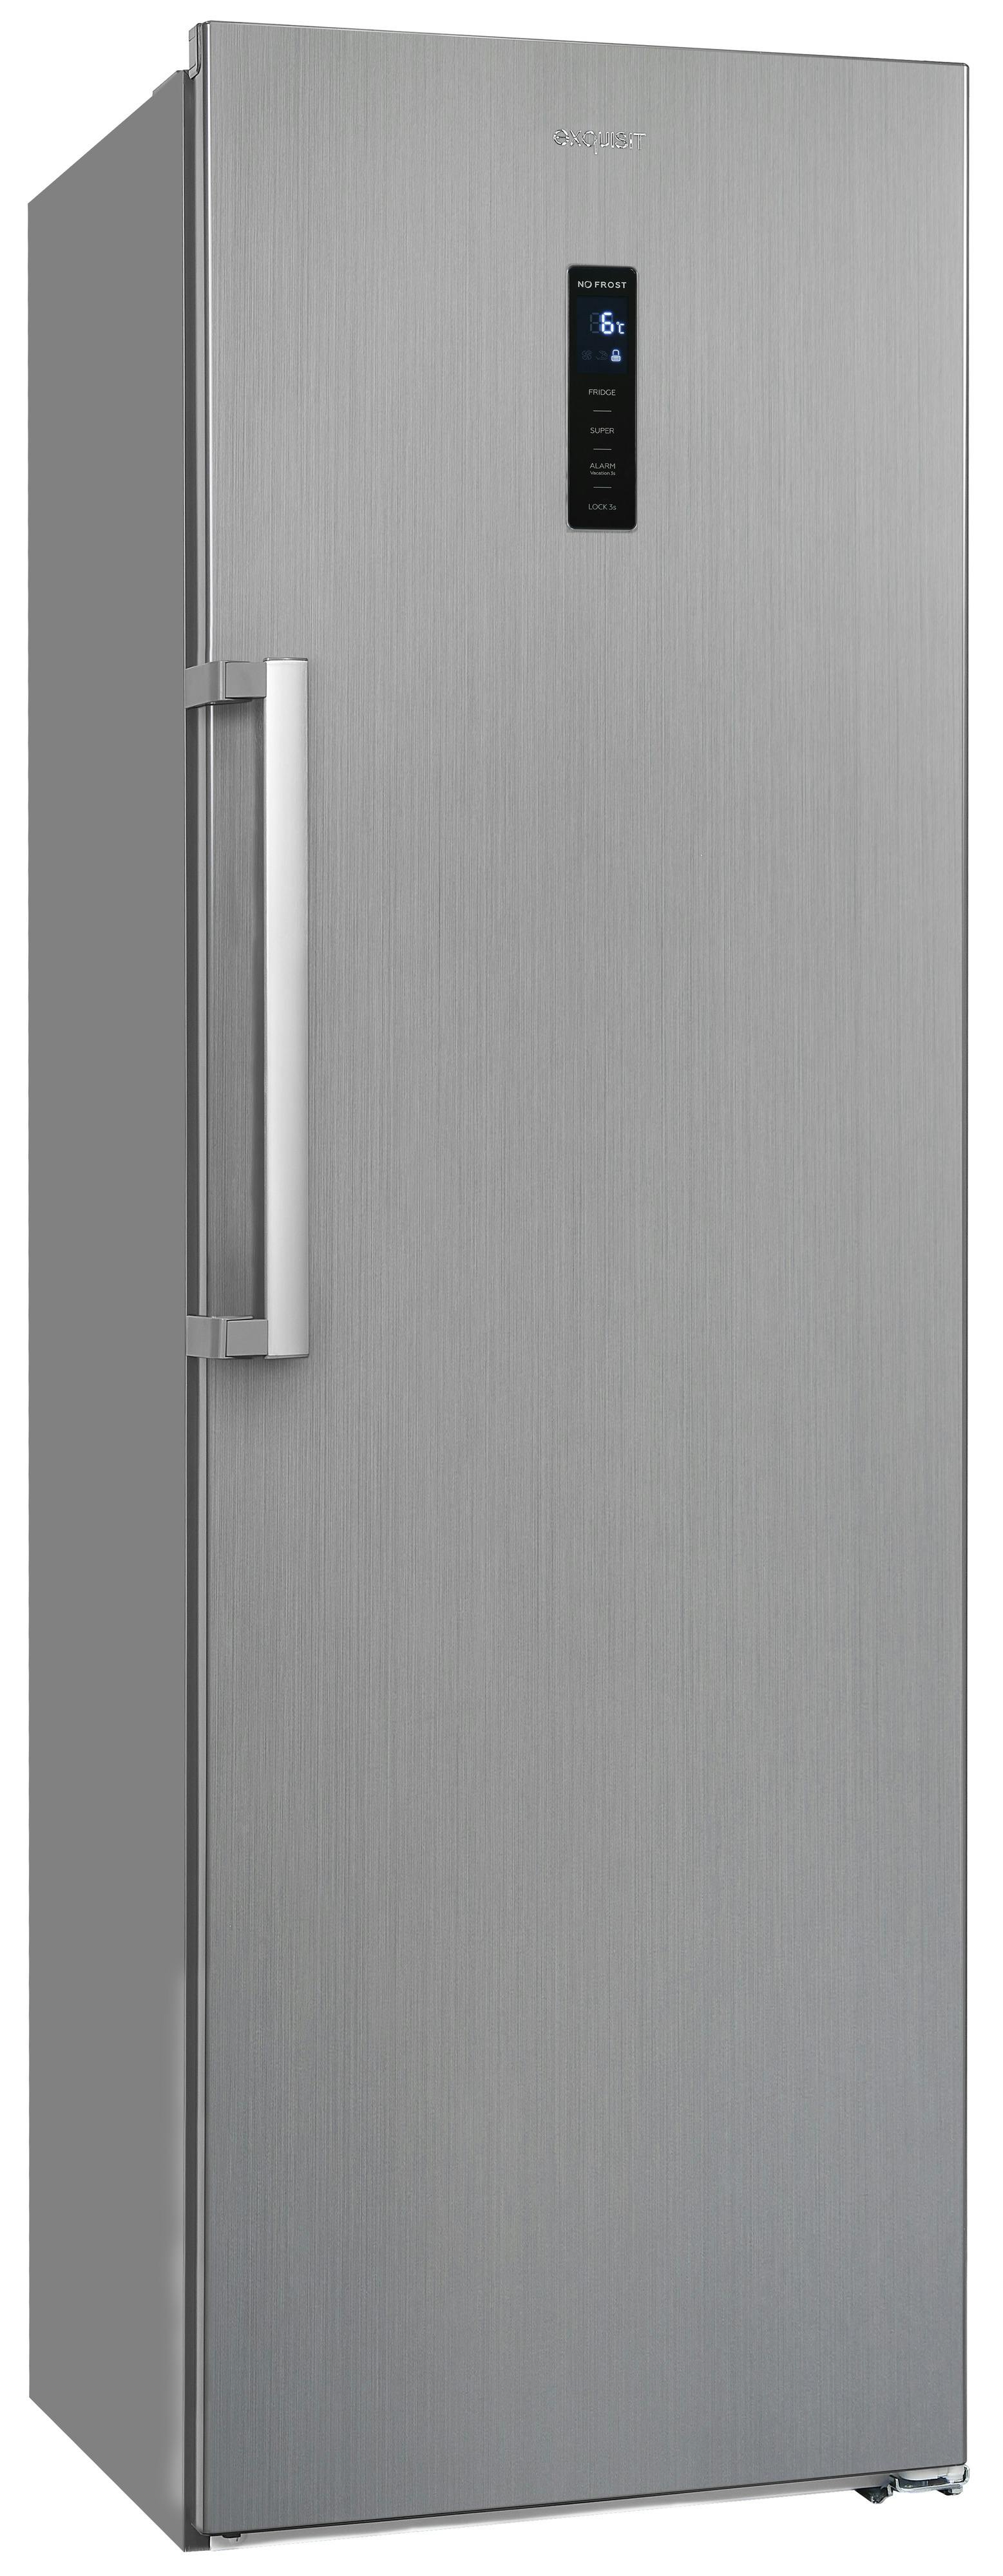 Exquisit Vollraumkühlschrank KS360-V-HE-040E inoxlook Nutzinhalt | l Marktplatz 359 Edelstahloptik | METRO 